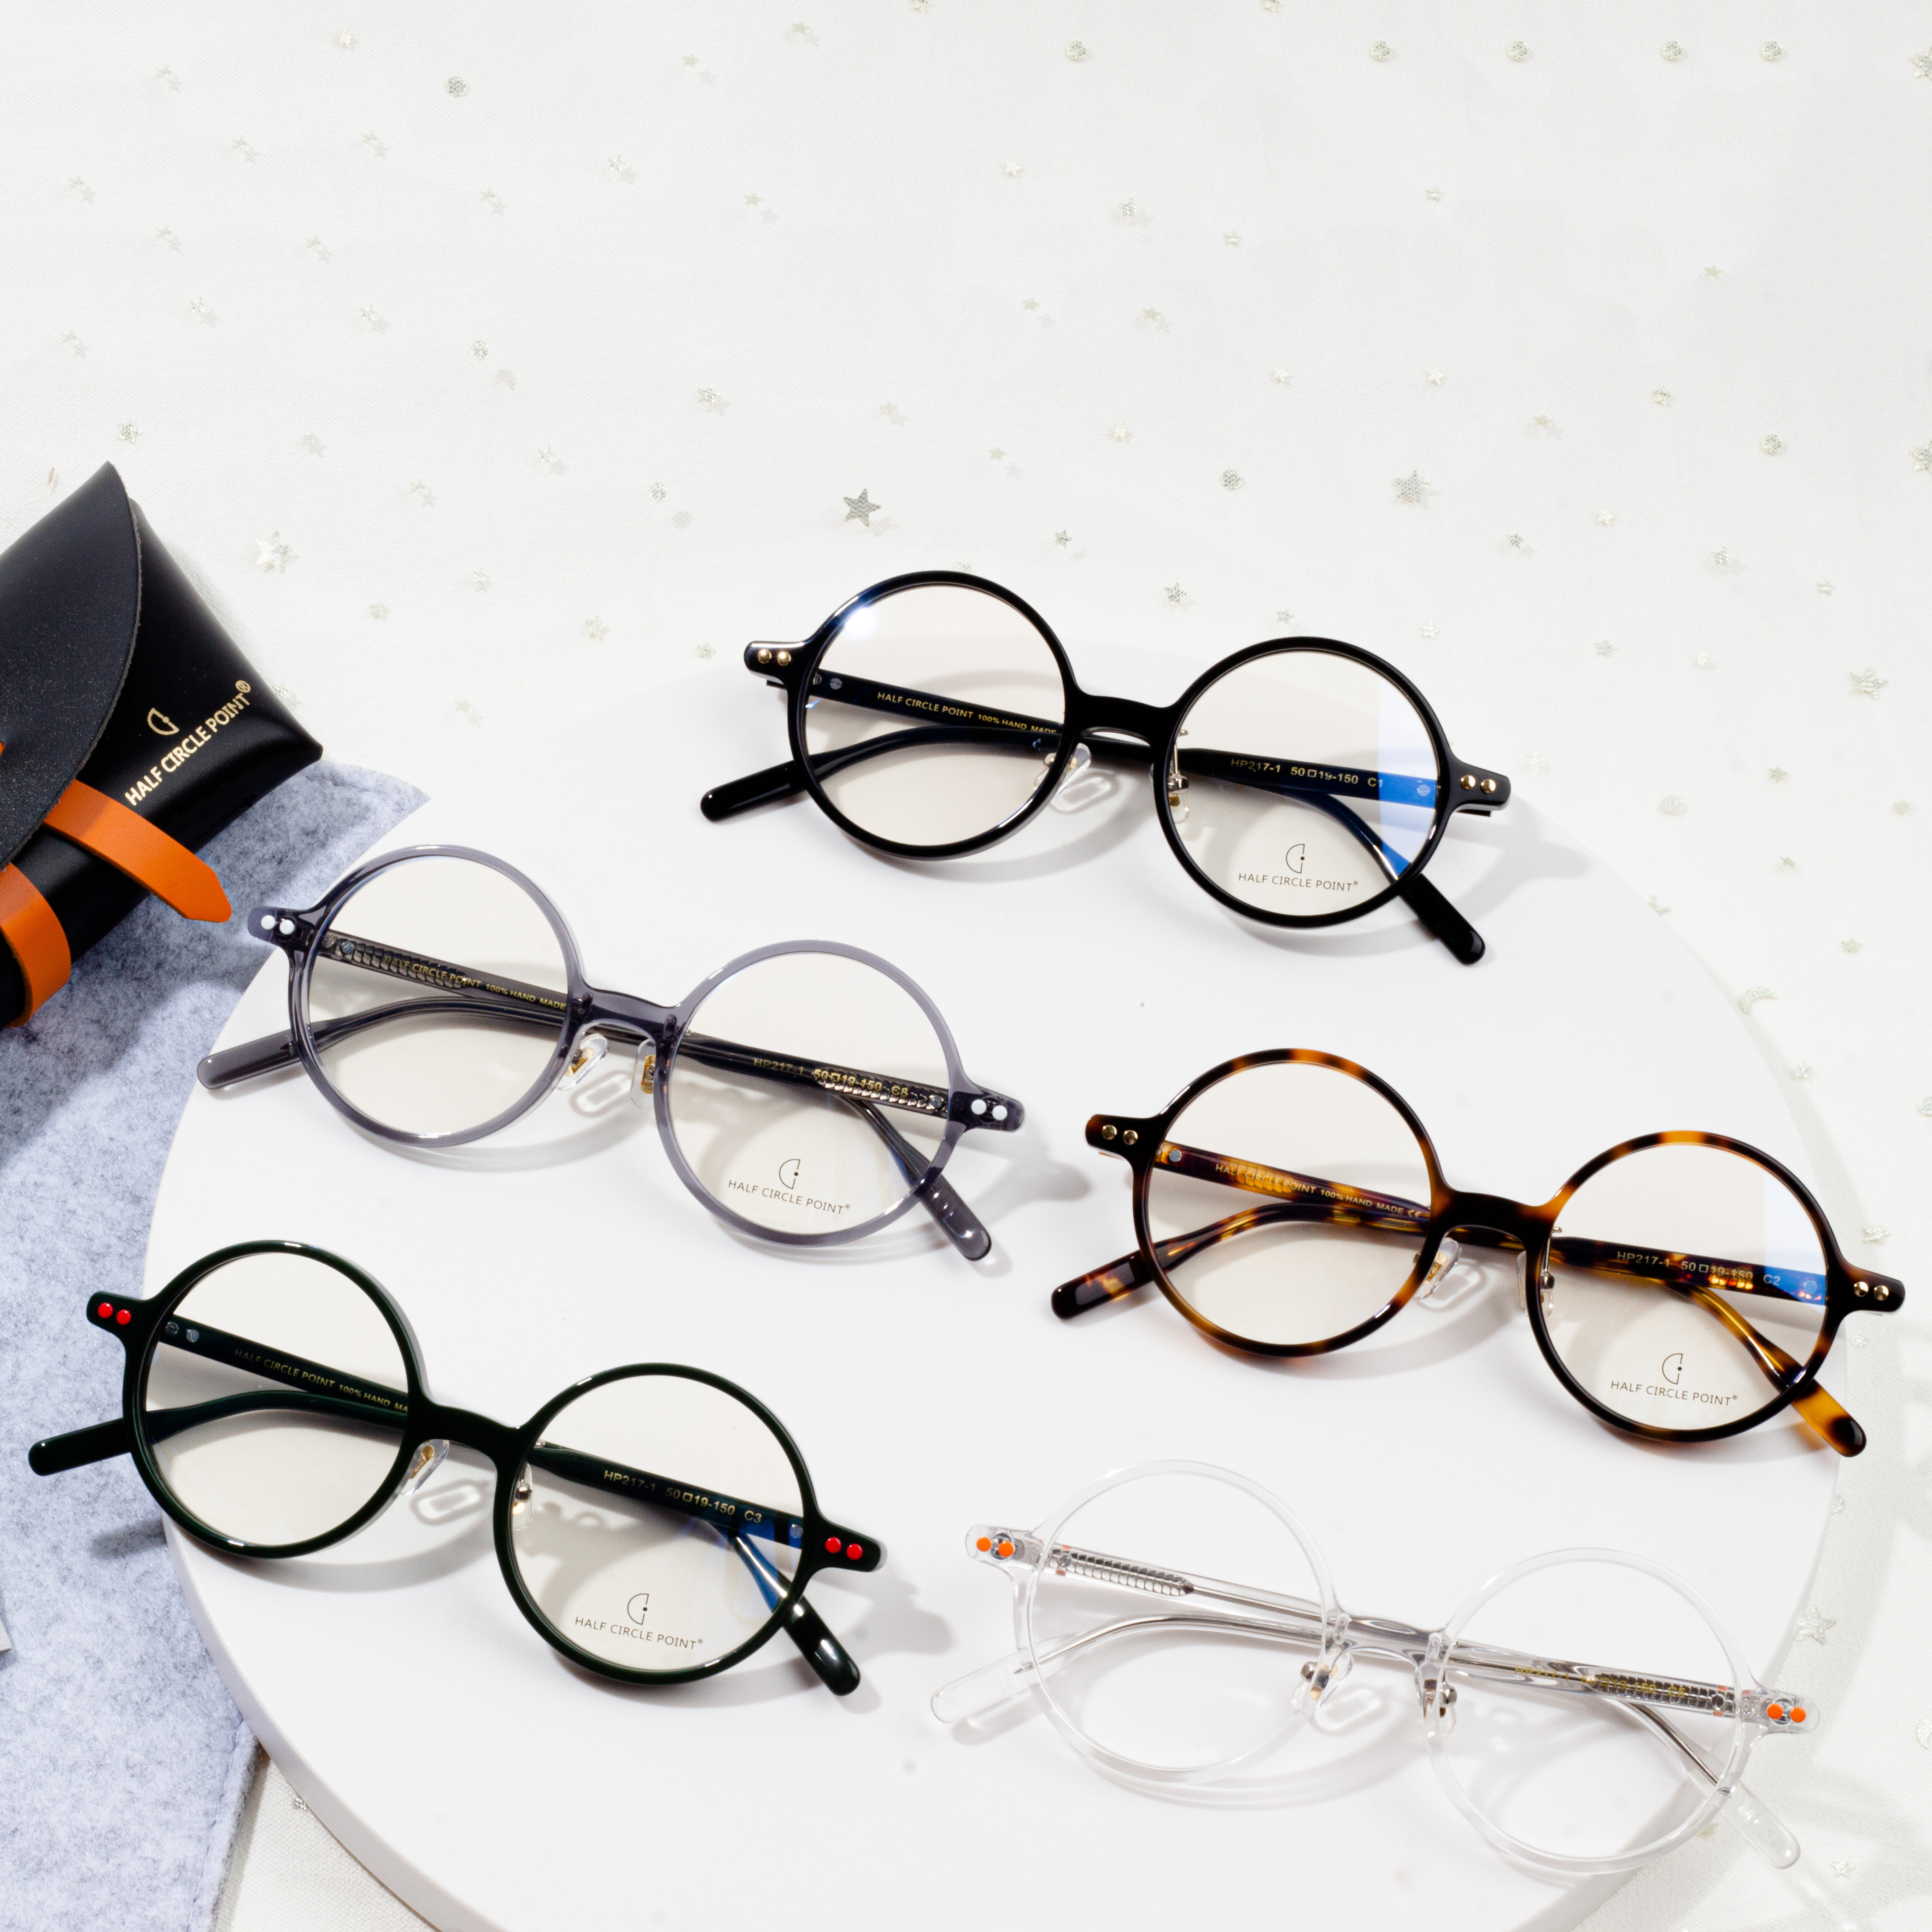 Factory Free sample Brand Eyeglass Frames - Most popular optical unisex eyewear frames – HJ EYEWEAR